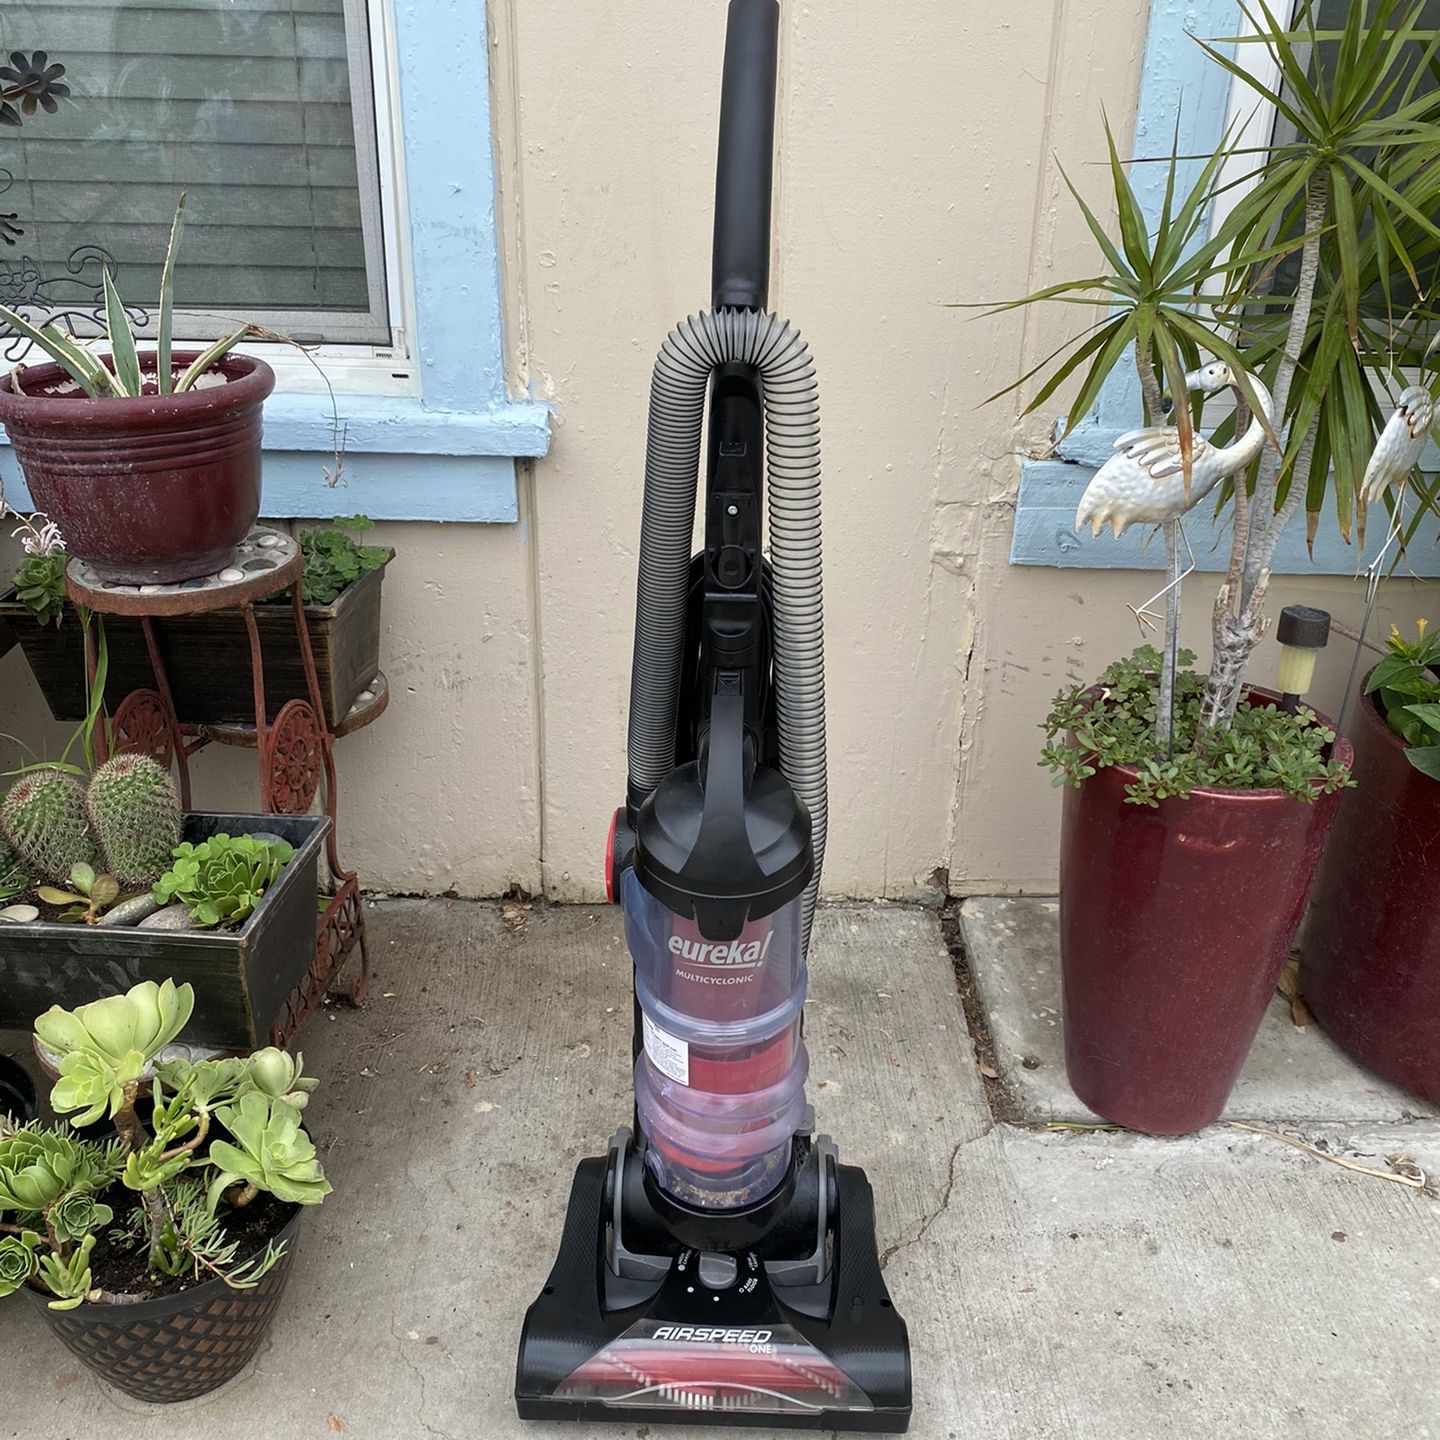 Black+Decker air swivel vacuum for Sale in La Habra, CA - OfferUp